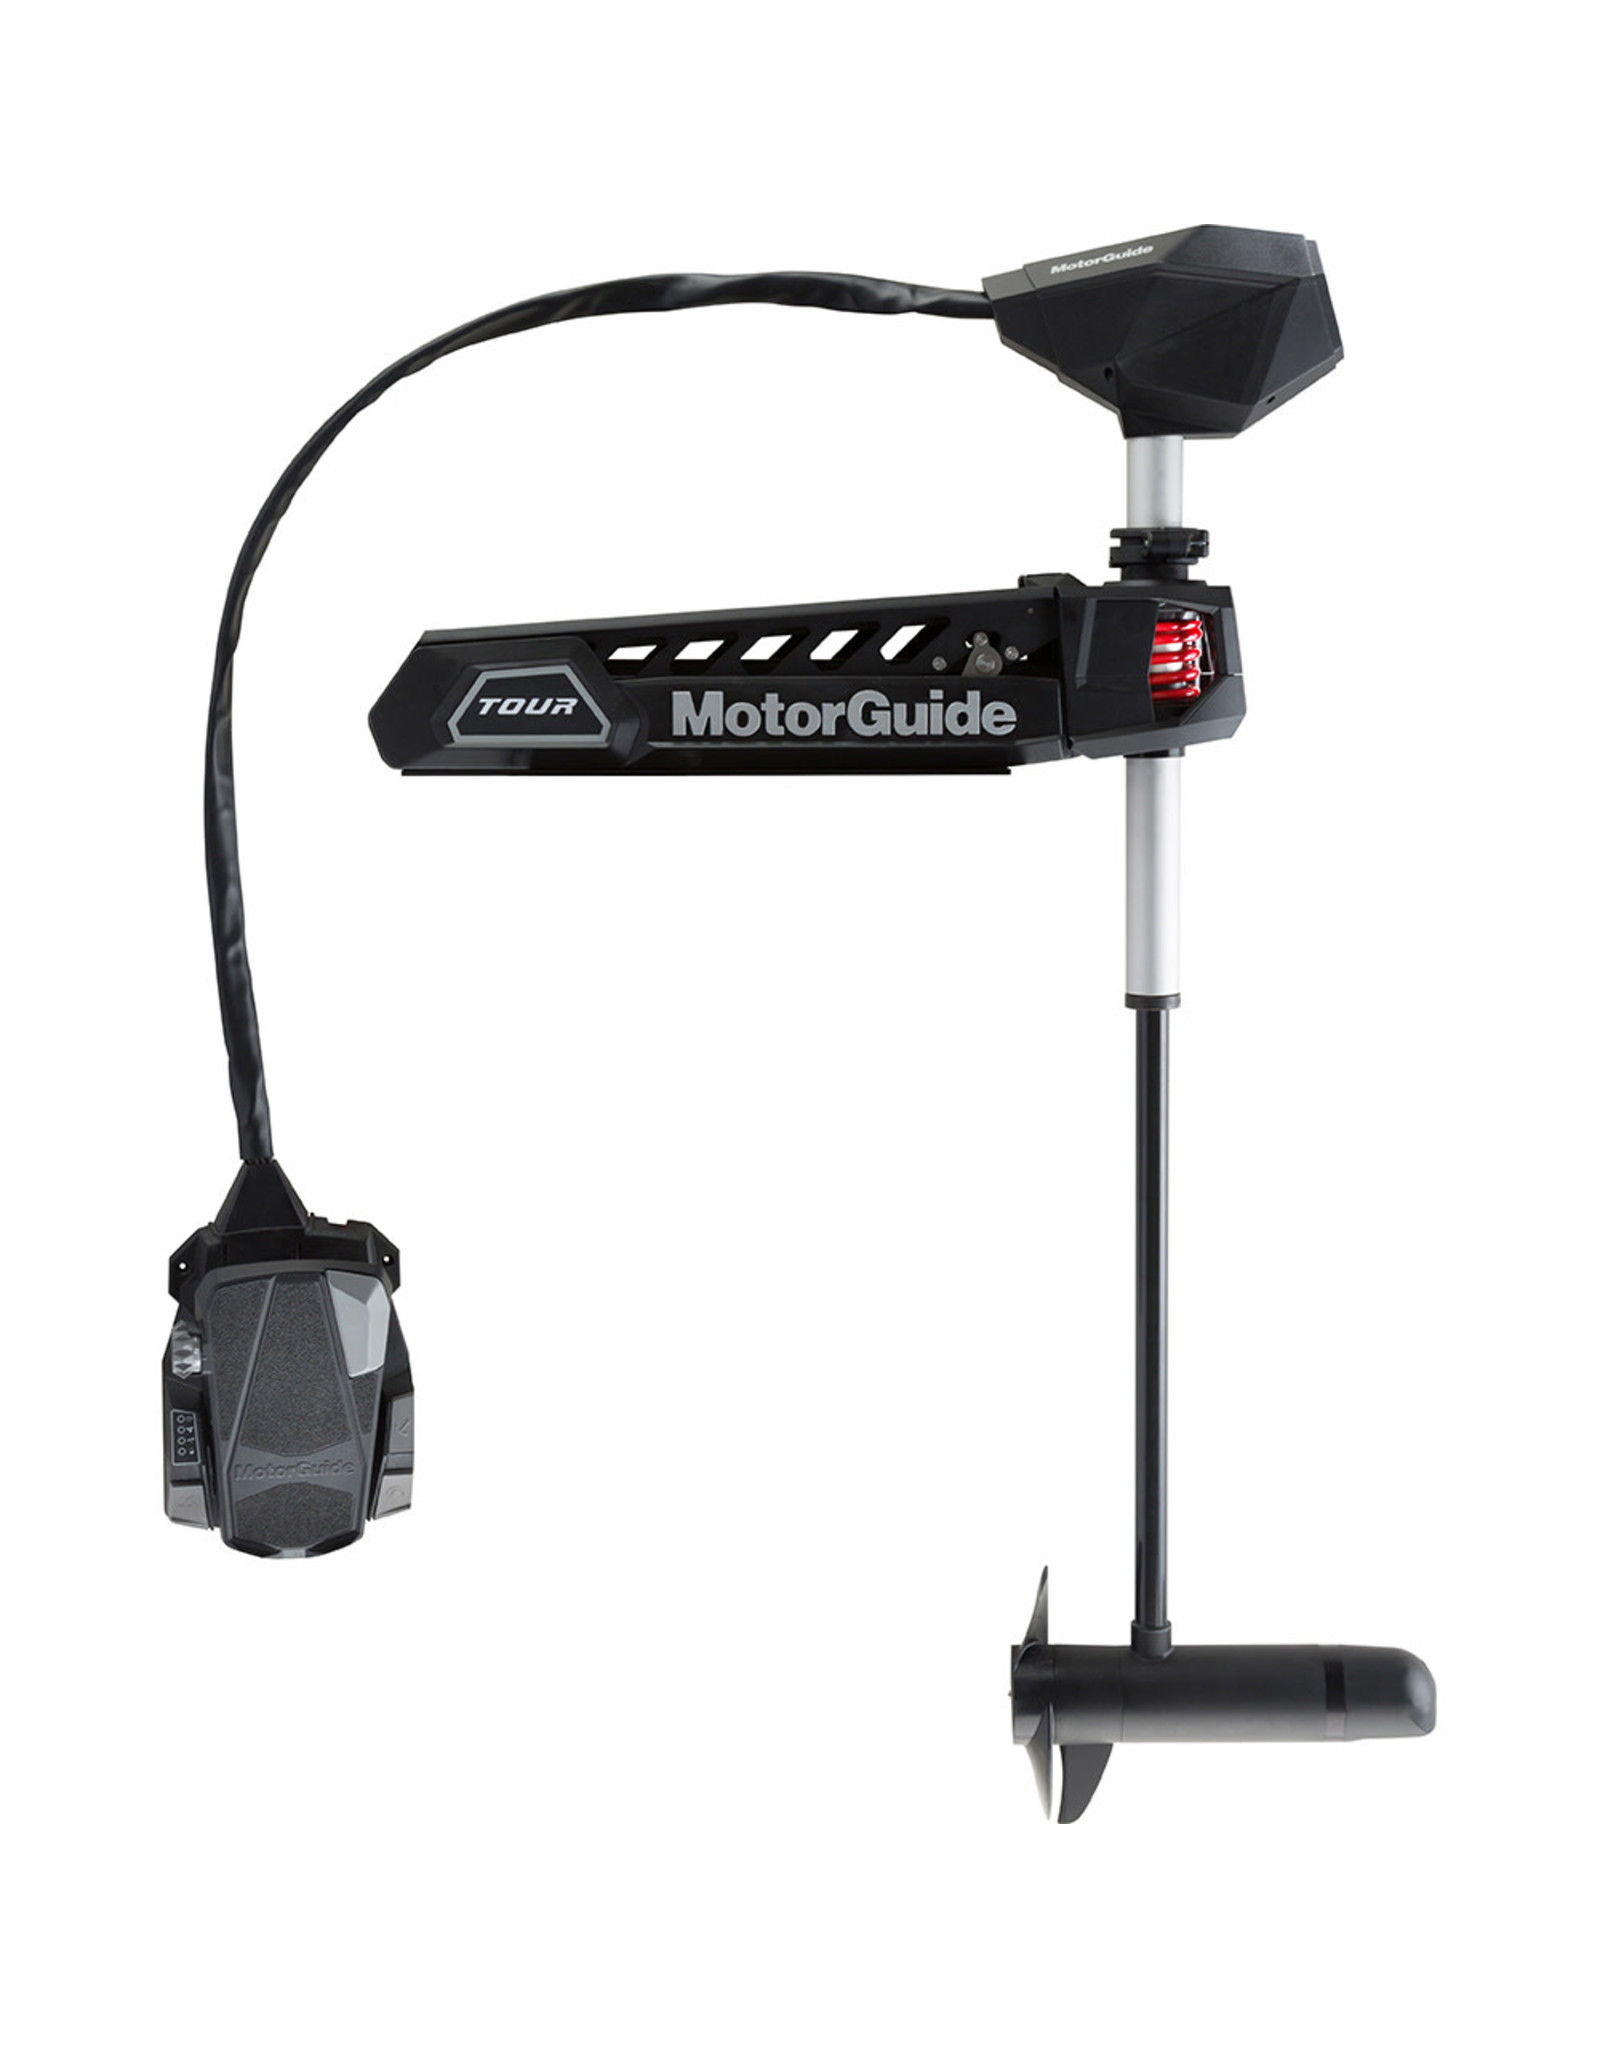 Motorguide Tour Pro 109lb-45"-36V Pinpoint GPS